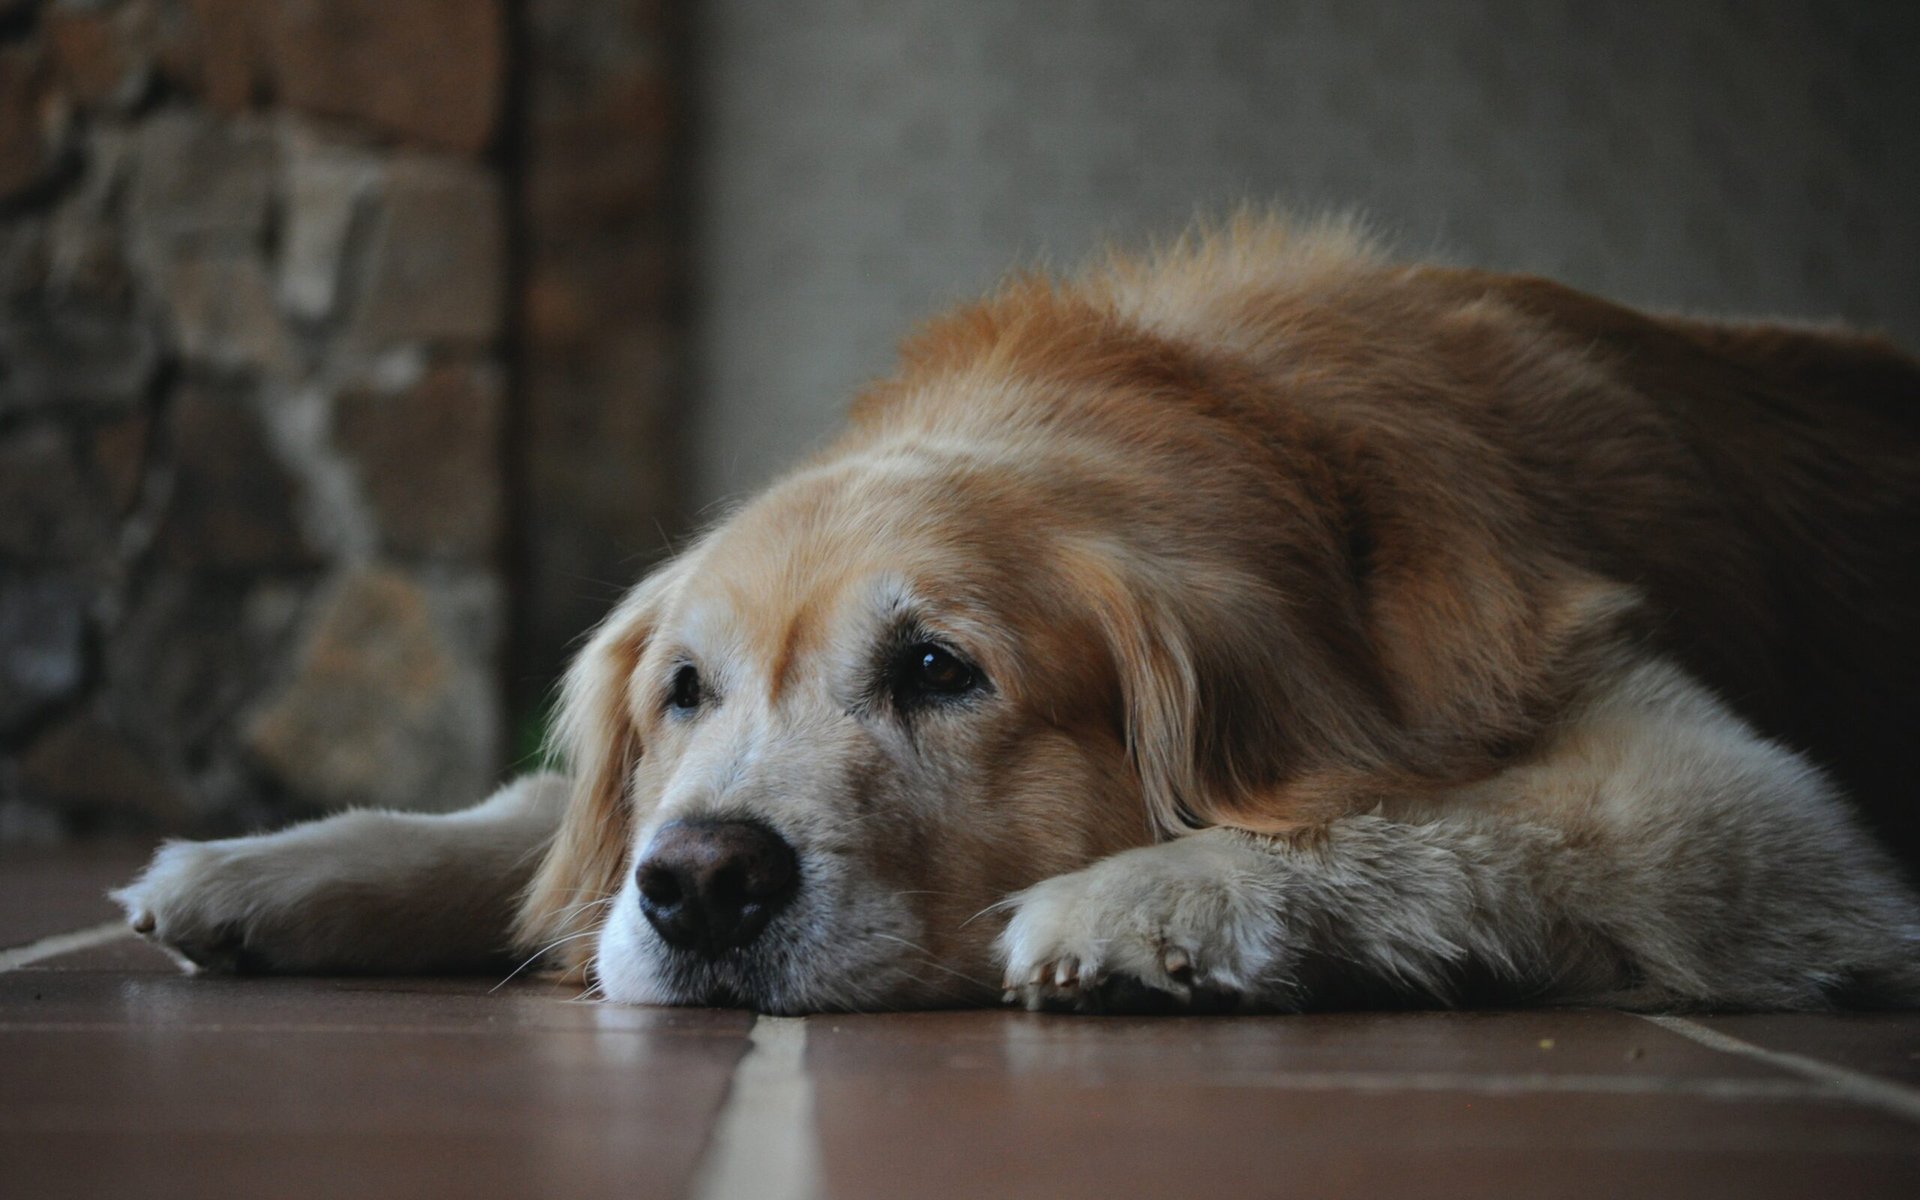 An old dog lays on the floor